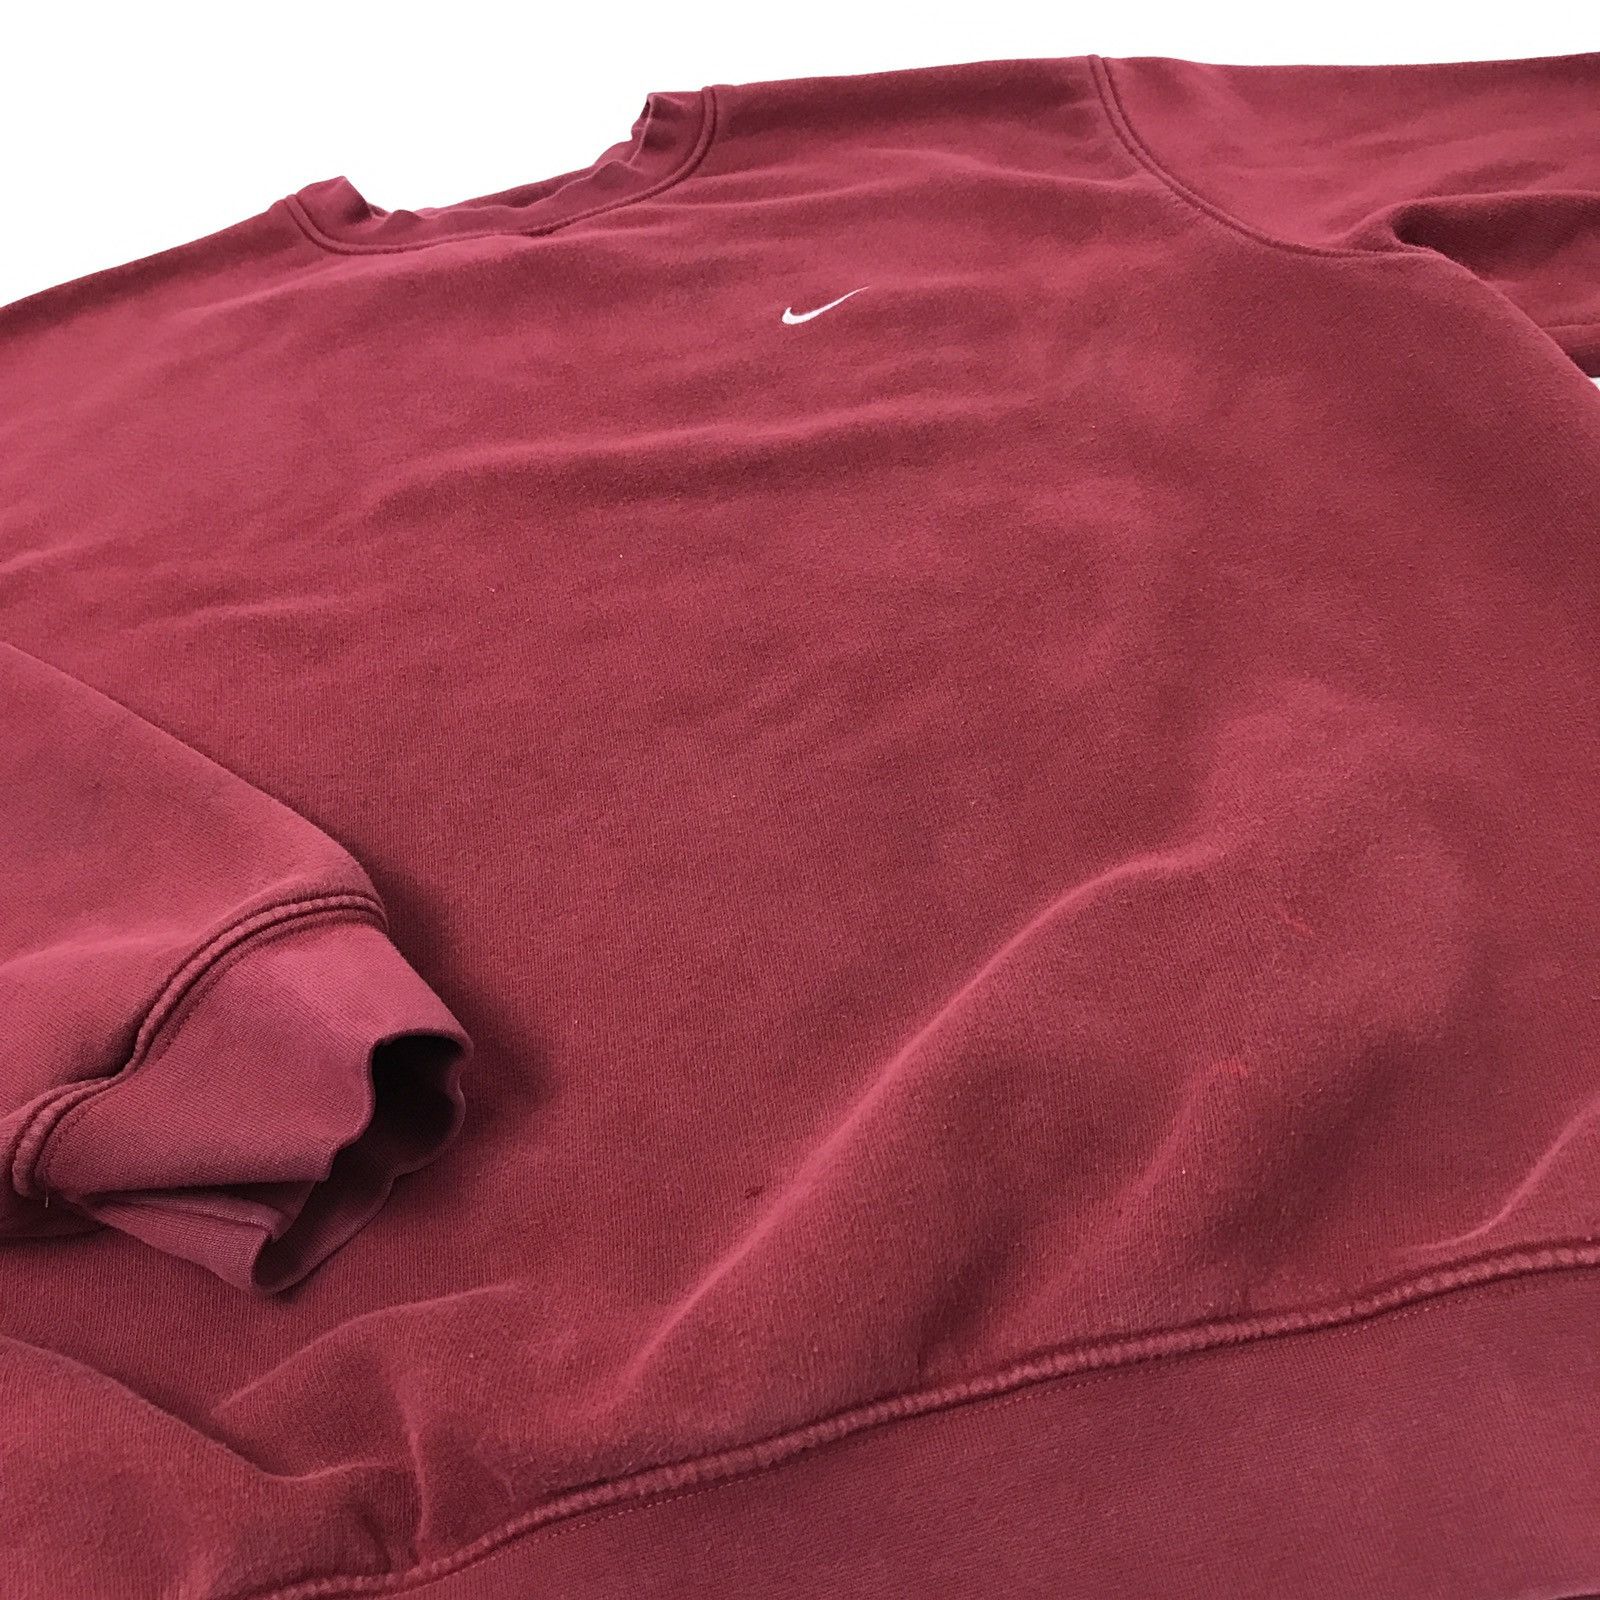 Nike Nike maroon embroidered crewneck sweatshirt Size US XL / EU 56 / 4 - 2 Preview